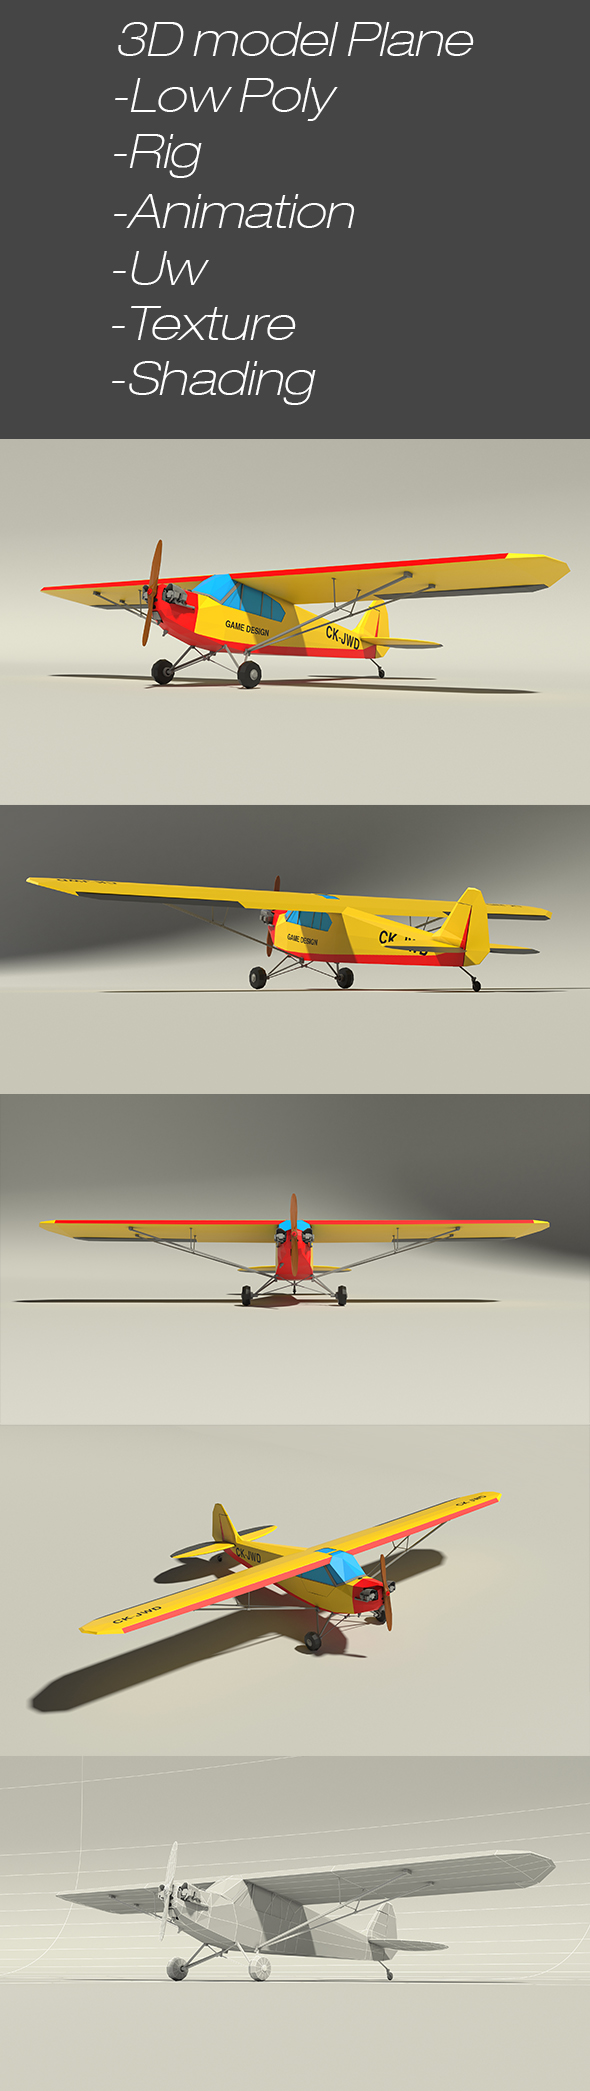 3D Model Plane - 3Docean 19524363